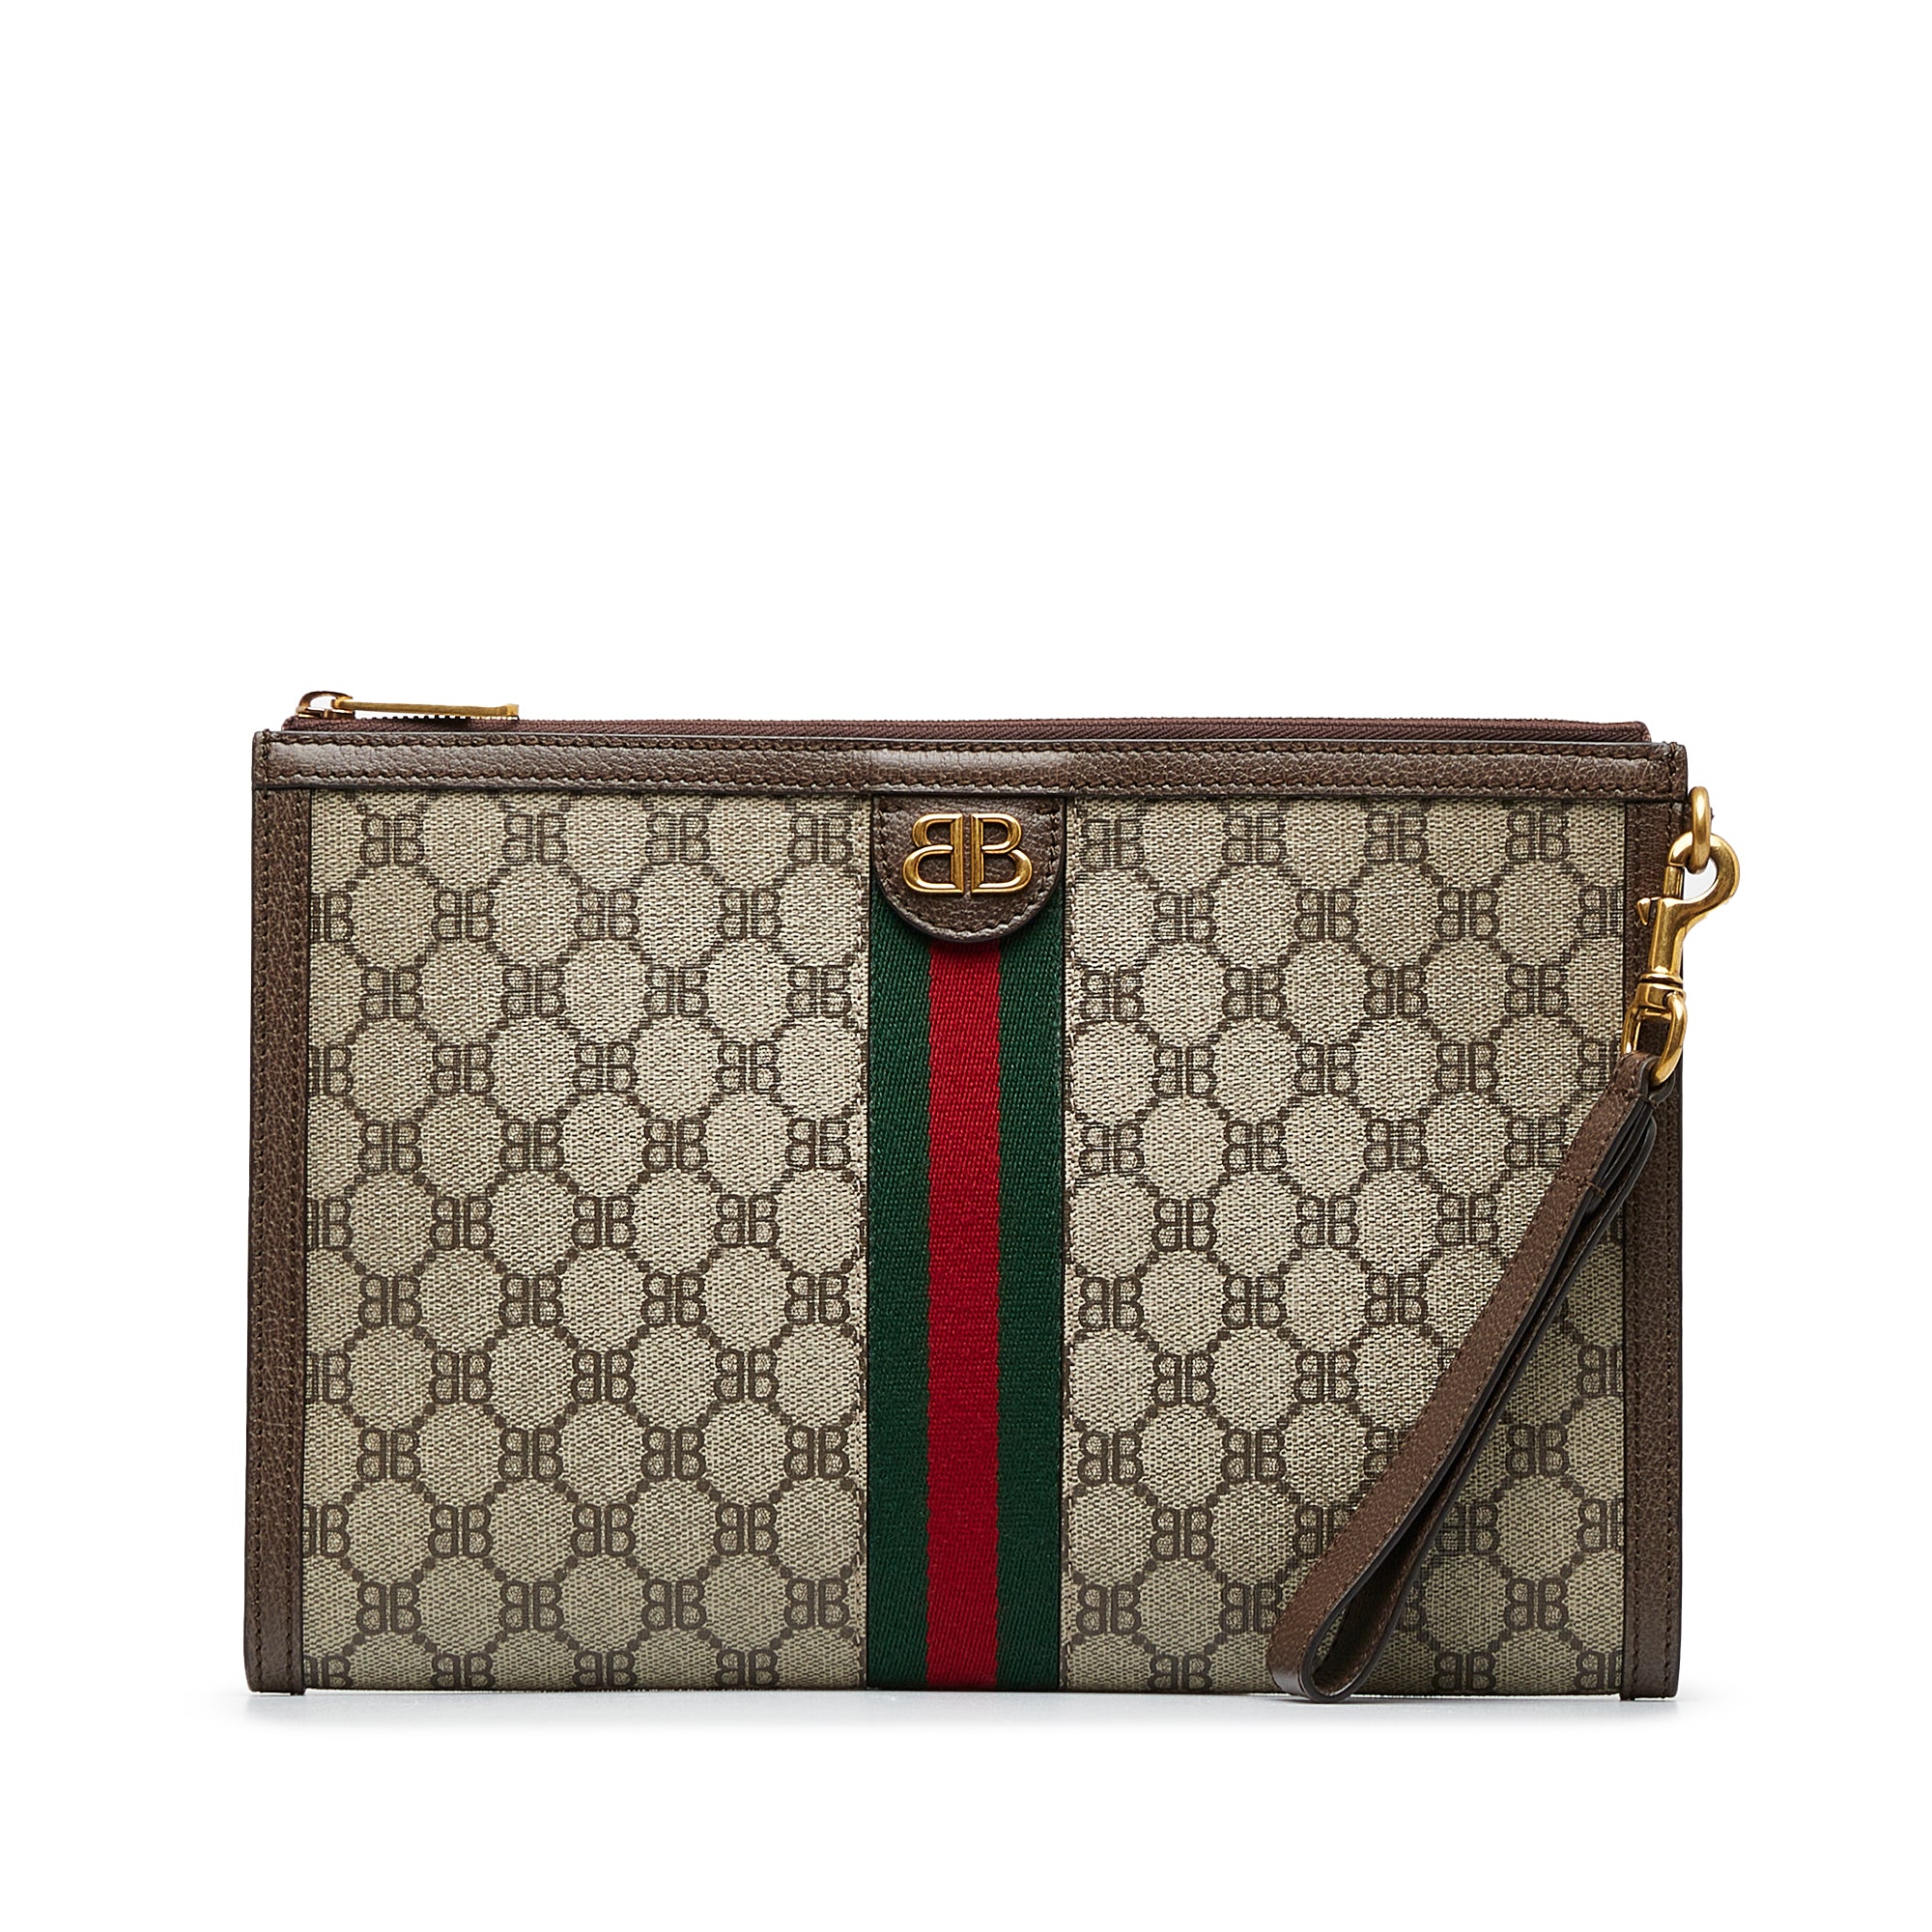 Louis Vuitton Supreme Authenticated Leather Handbag